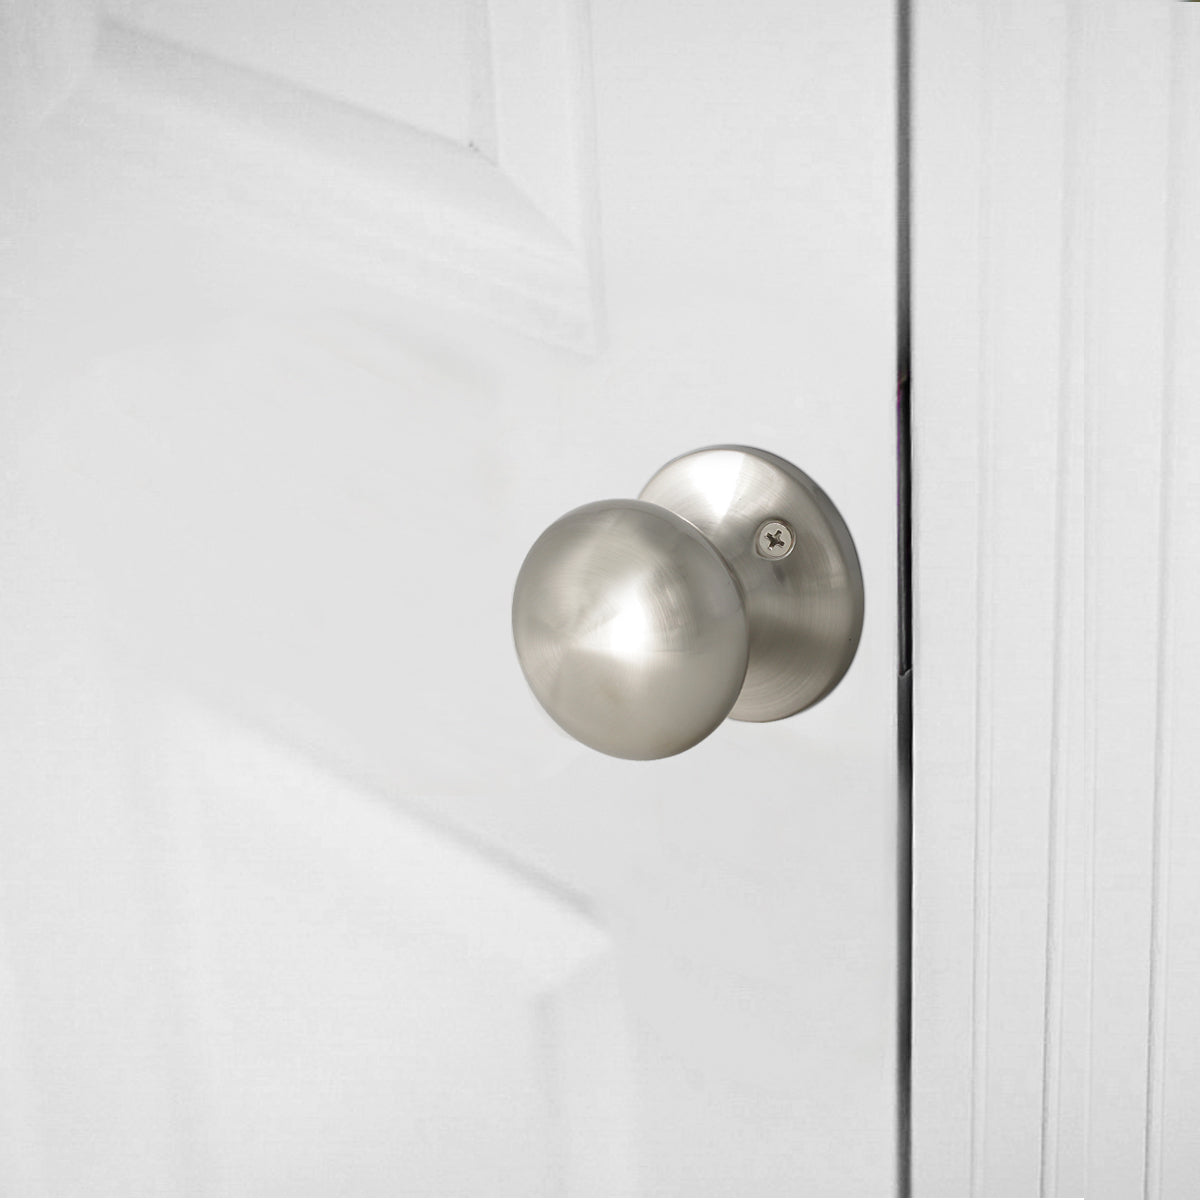 How to Fix an Old Doorknob That Sticks